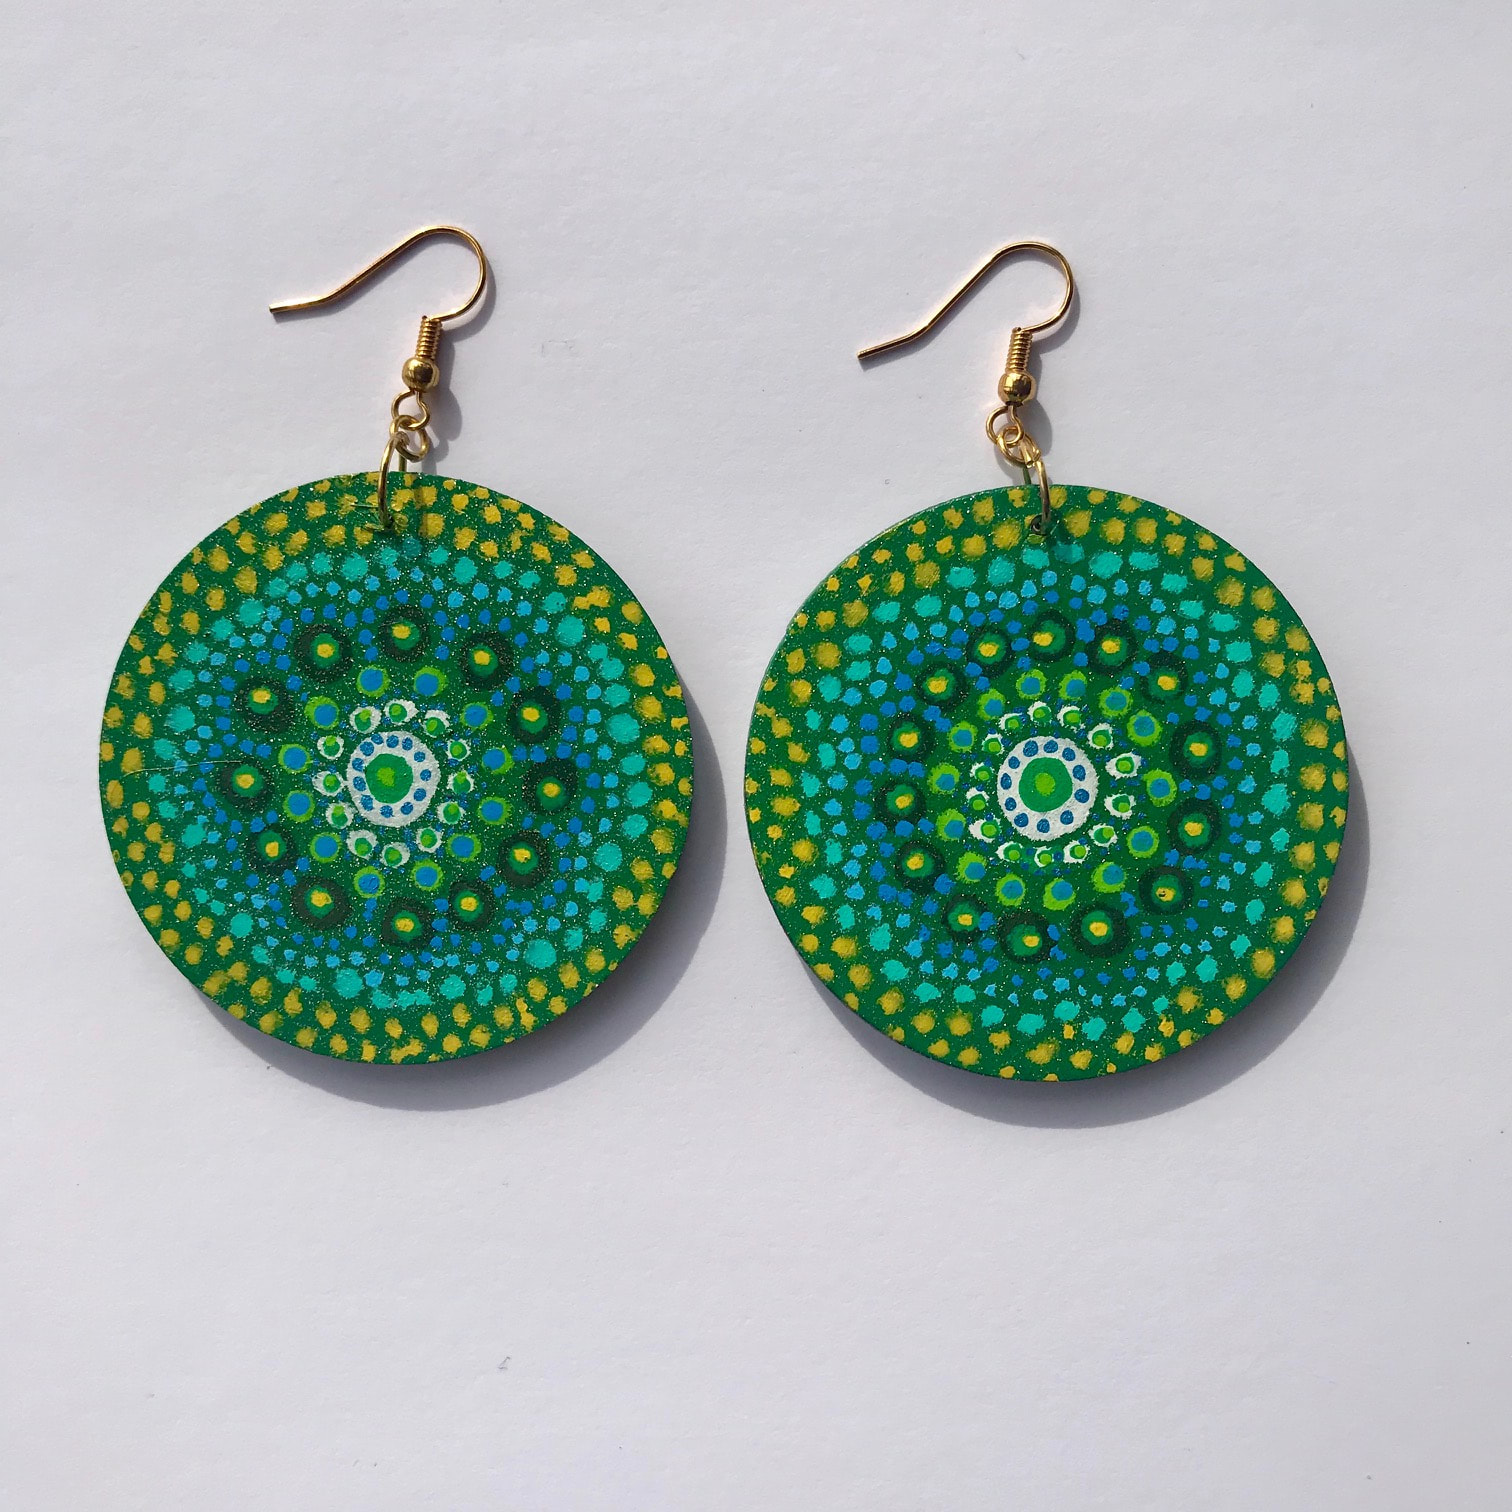 Hand painted mandala earrings